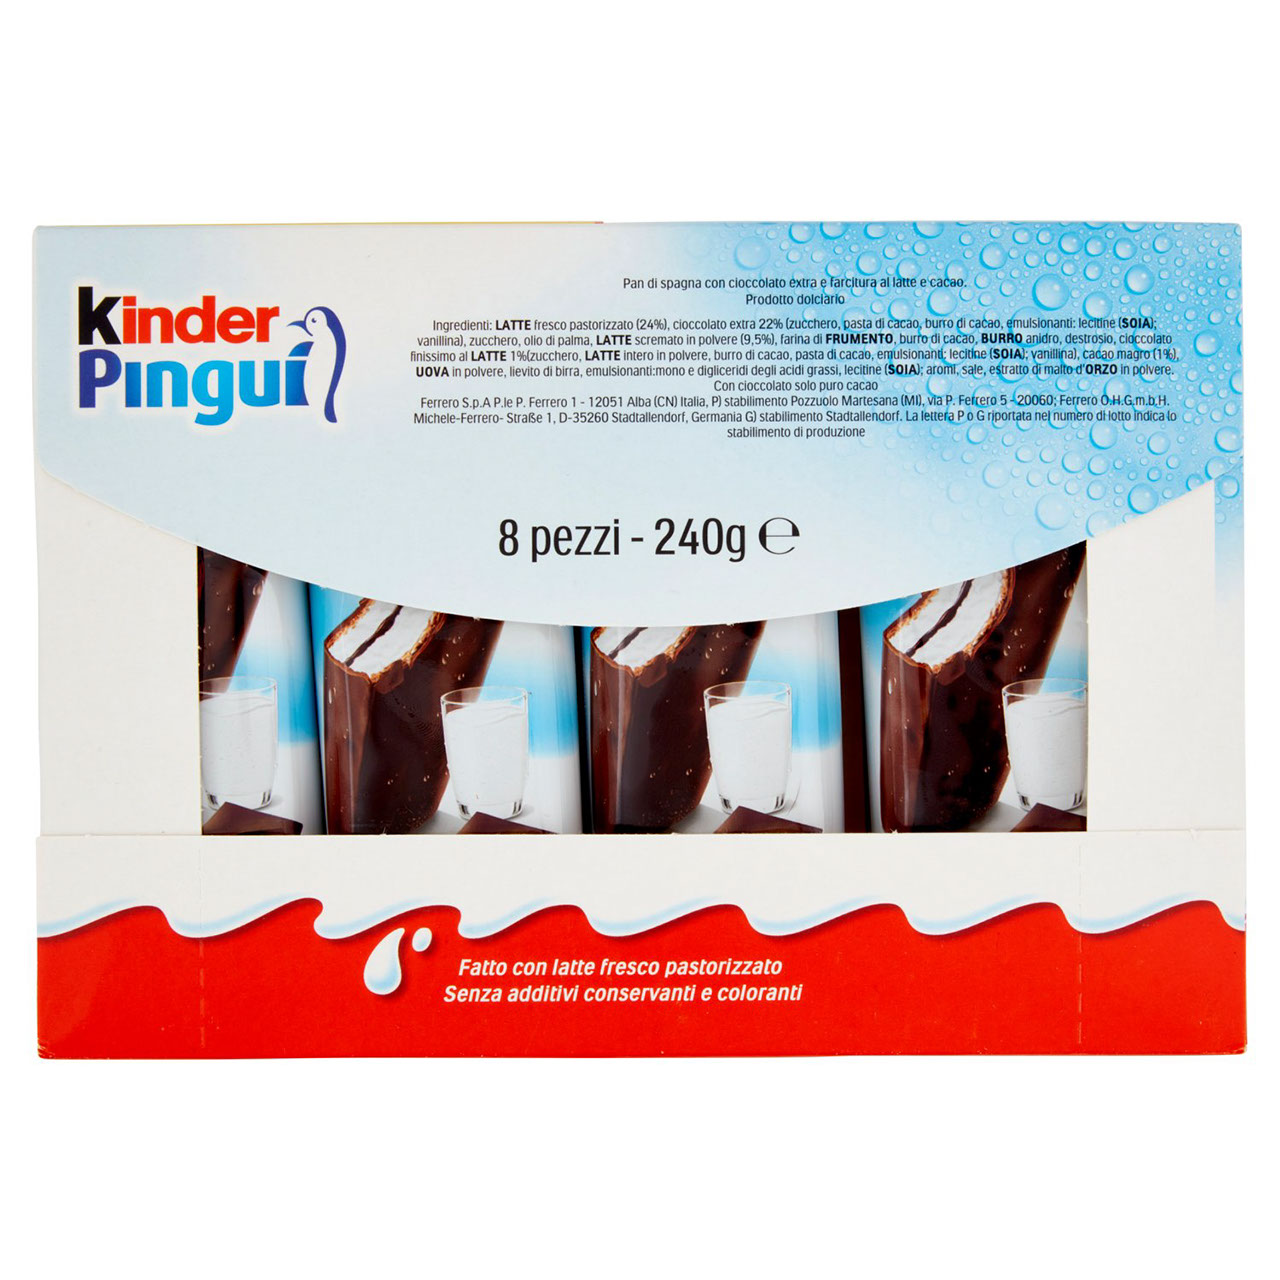 Kinder Pinguì 8 x 30 g